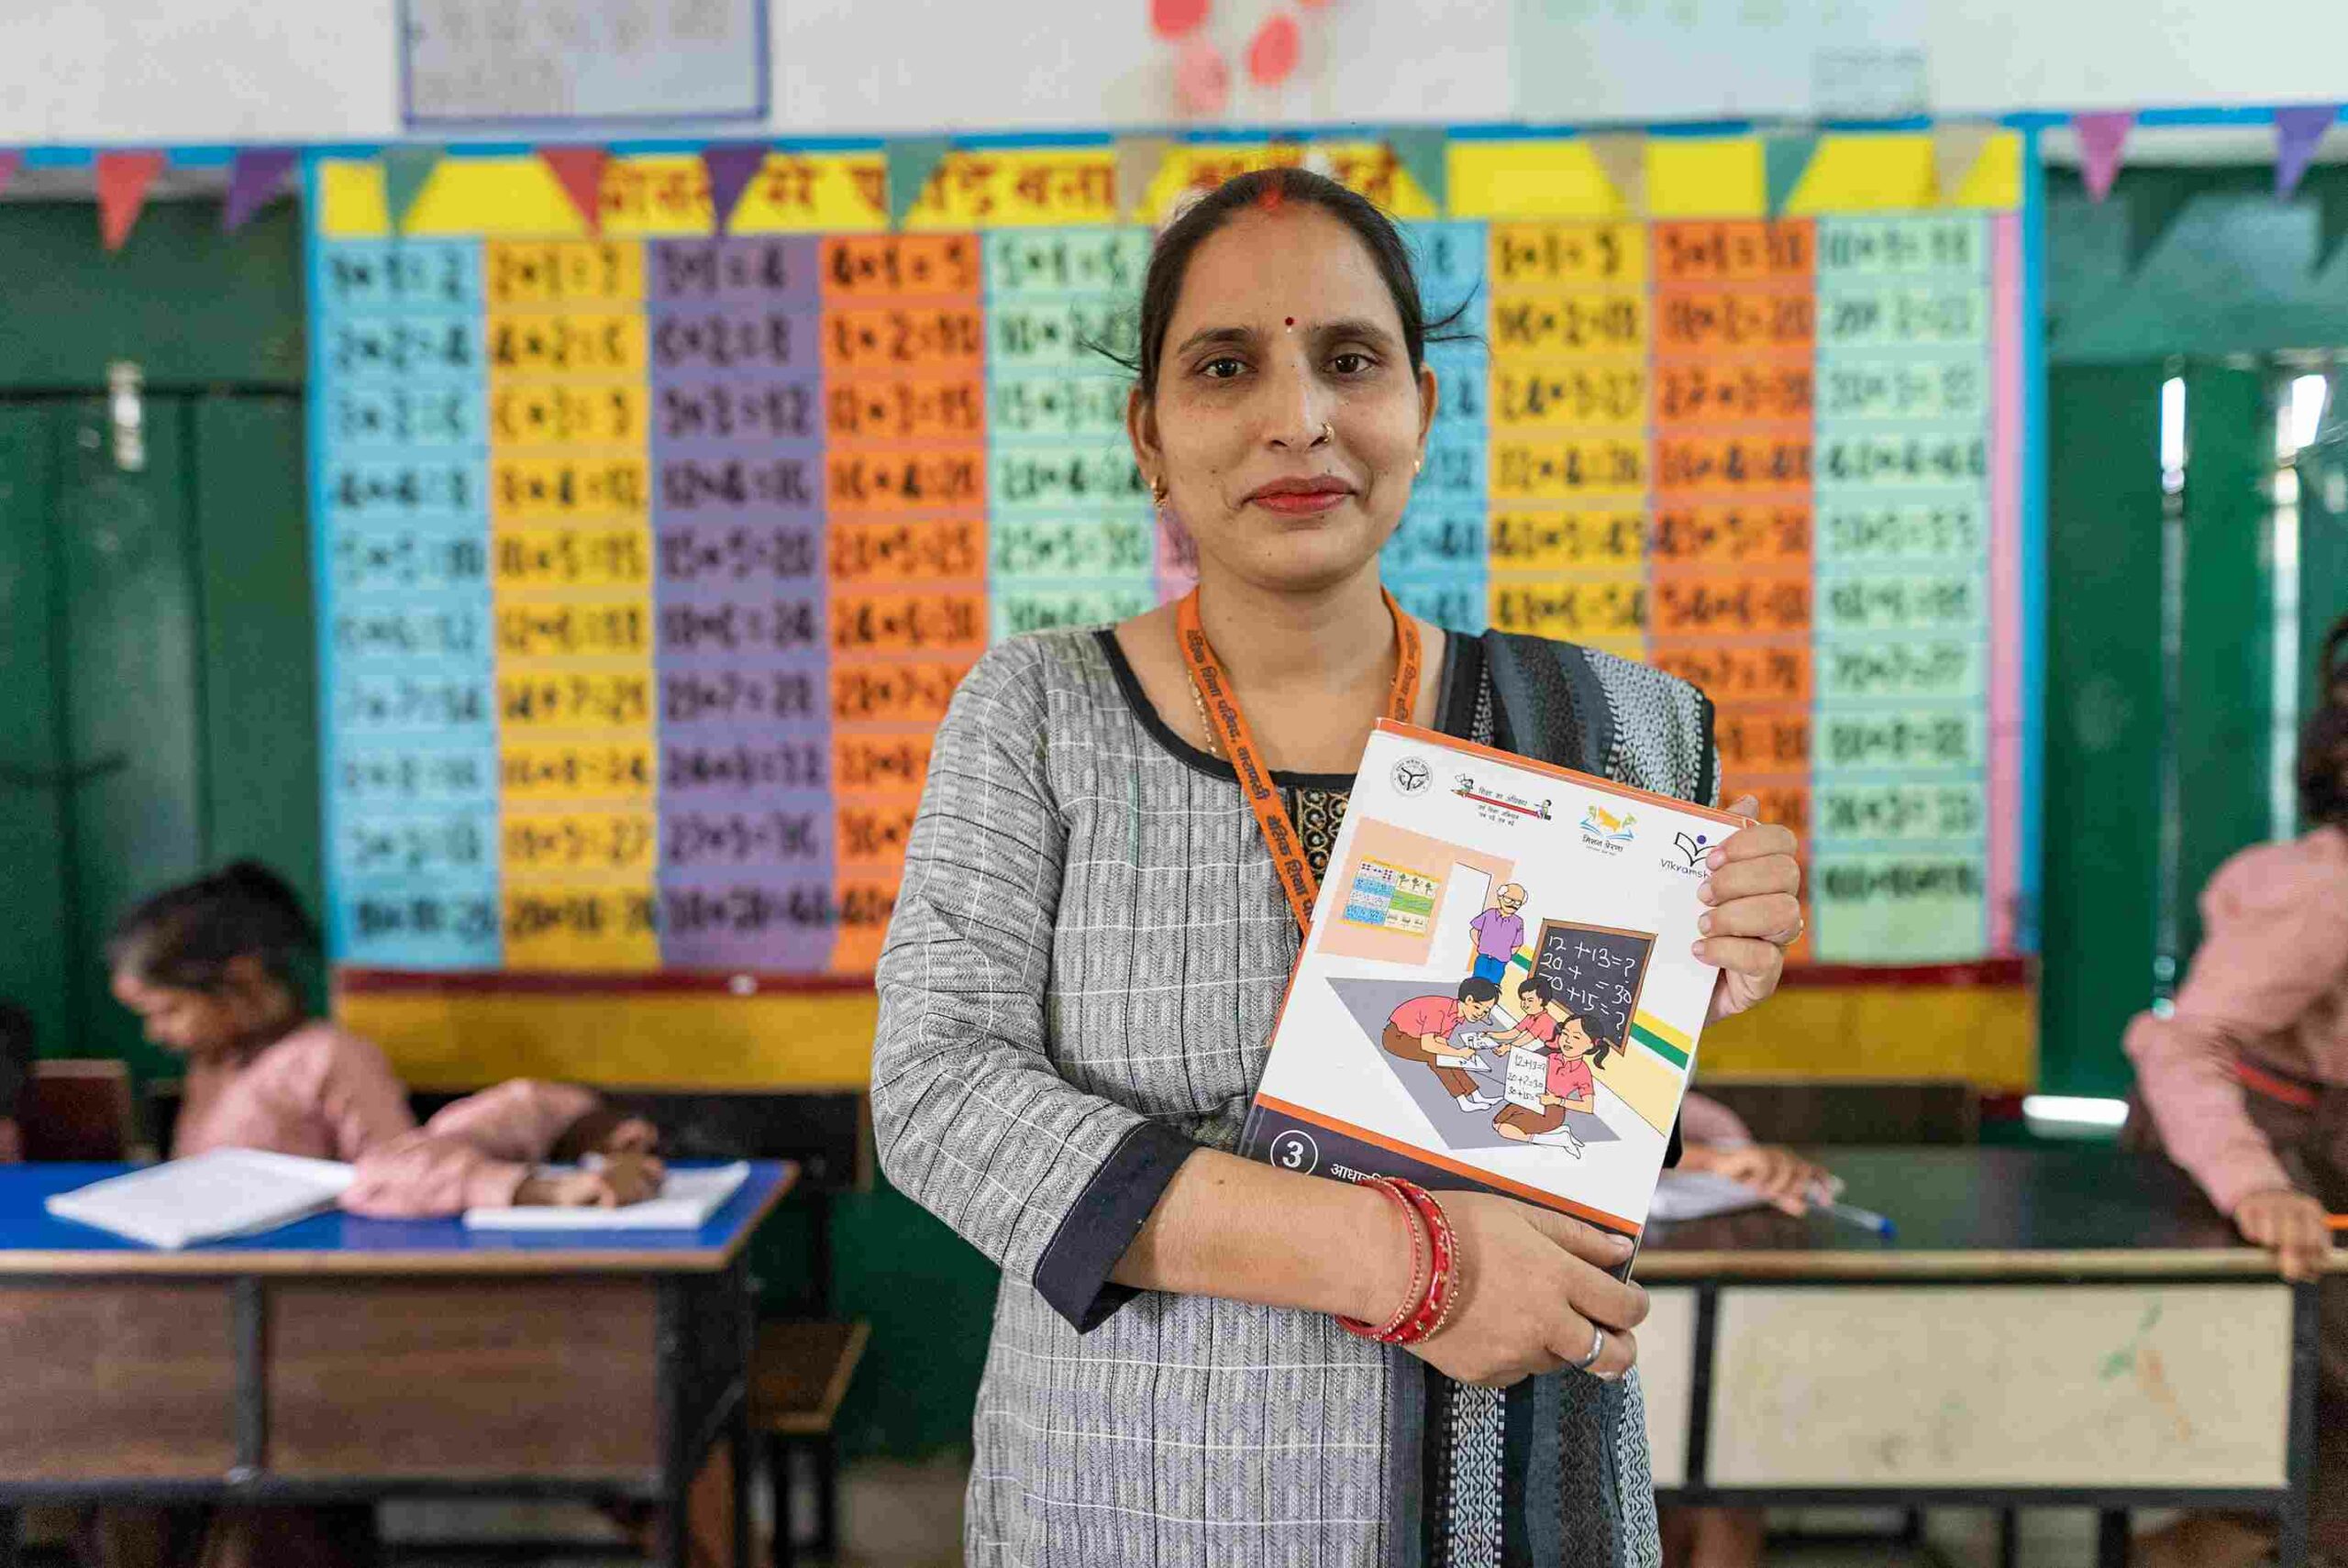 Sunita Singh is a Class 3 teammate teacher at Government Primary School in Sewapuri district of Uttar Pradesh.